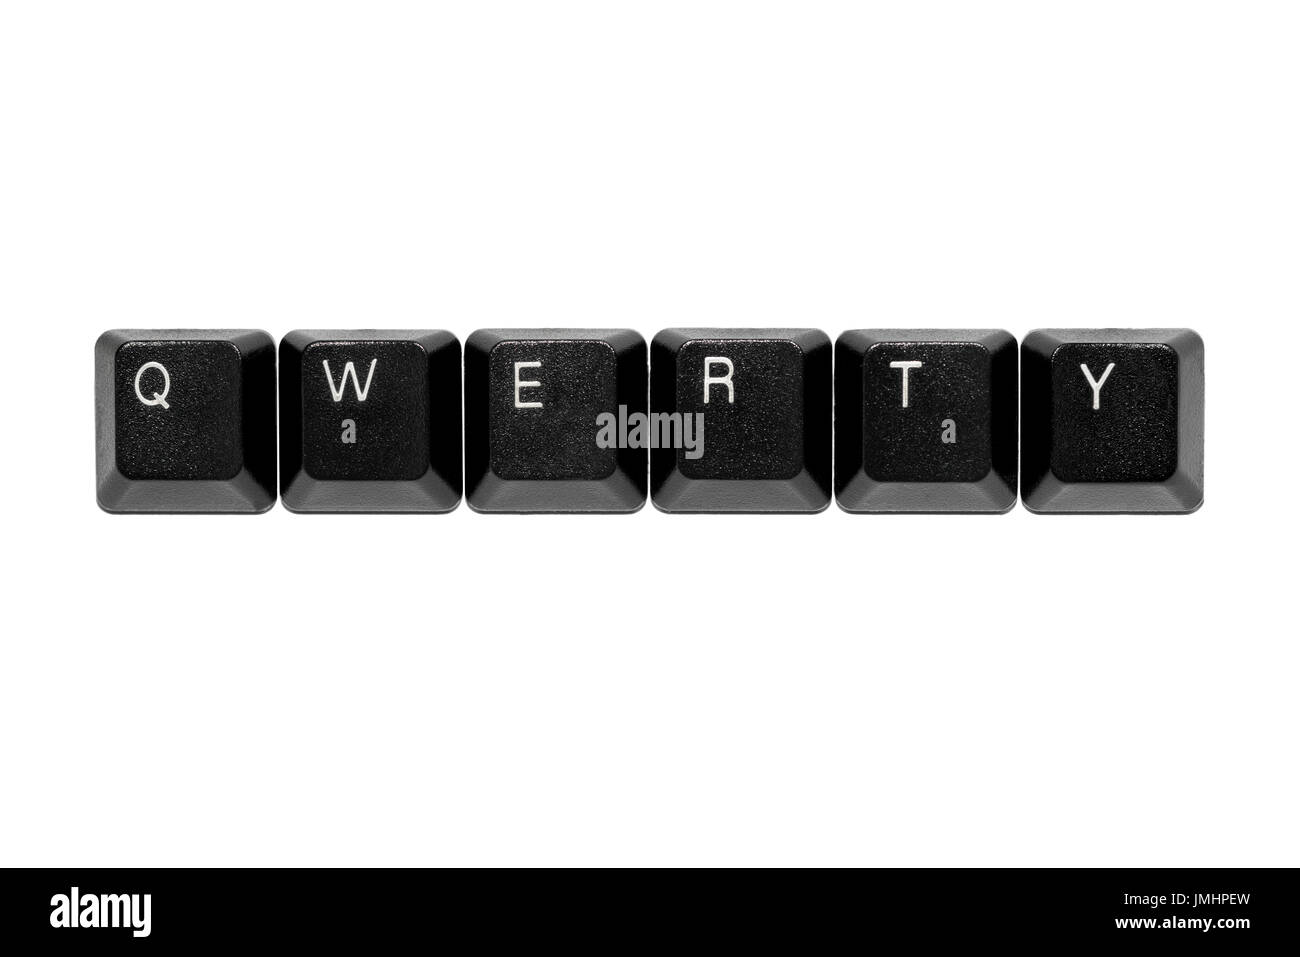 qwerty keyboard keys on white background Stock Photo